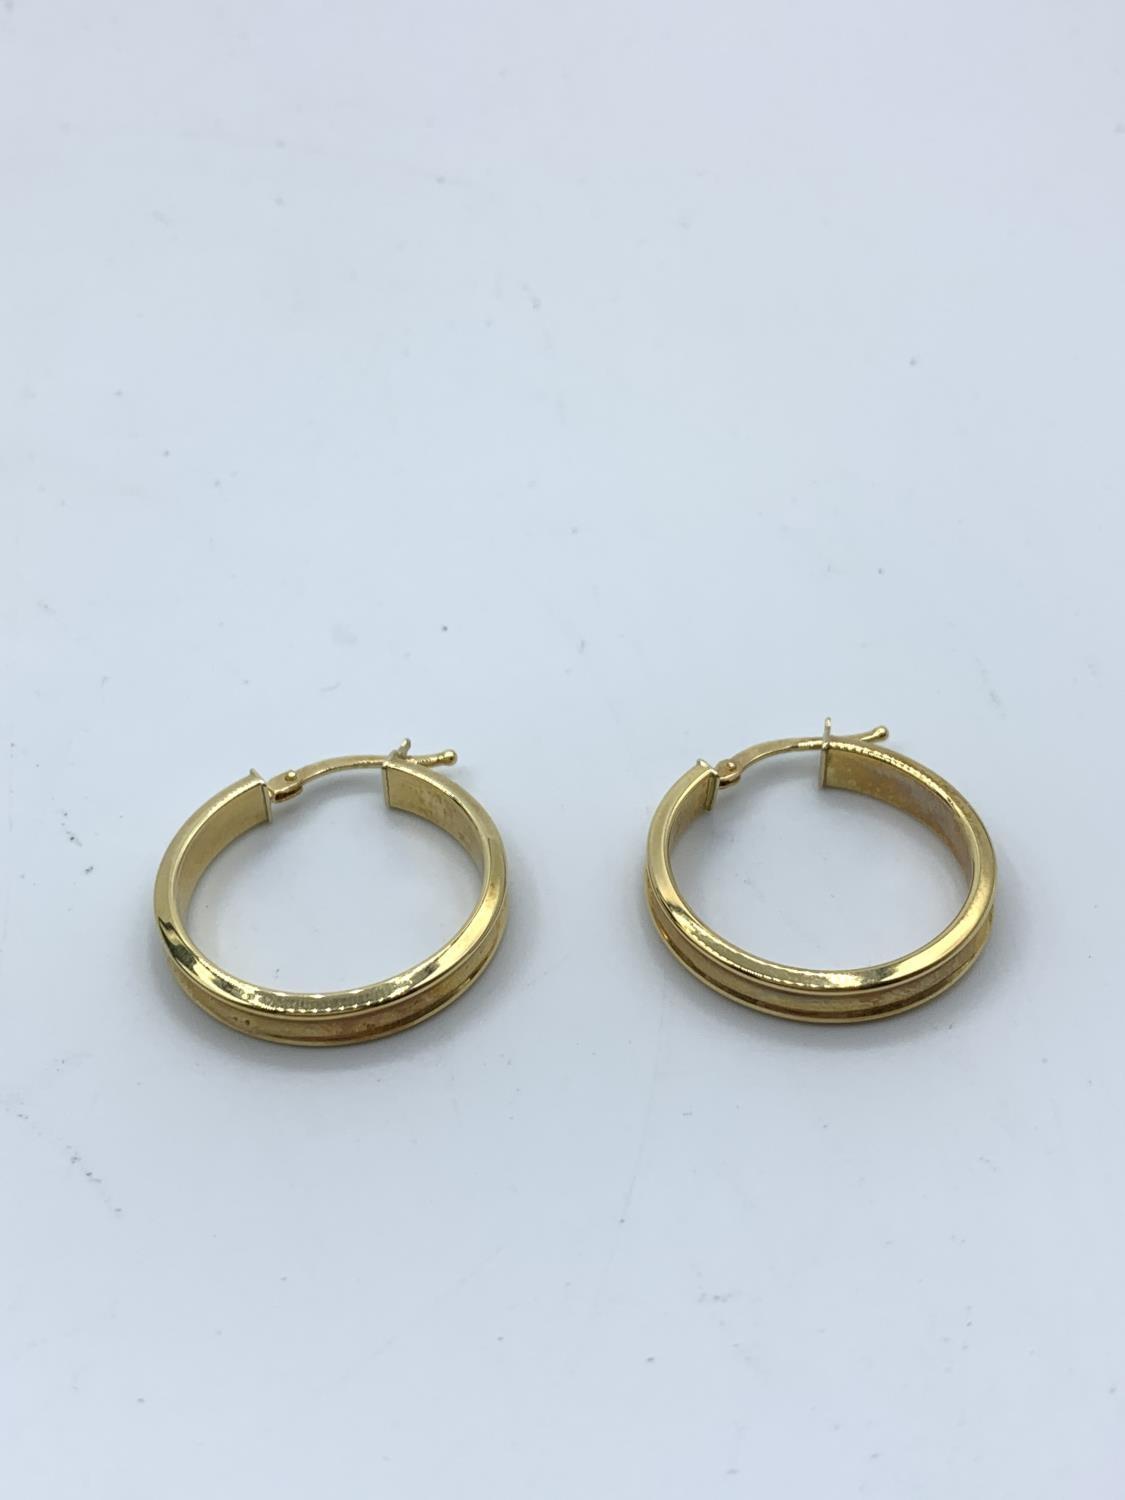 Pair of 18K Yellow Gold Hoop Earrings in original presentation box, weight 2.2g and 2cm diameter - Image 6 of 10